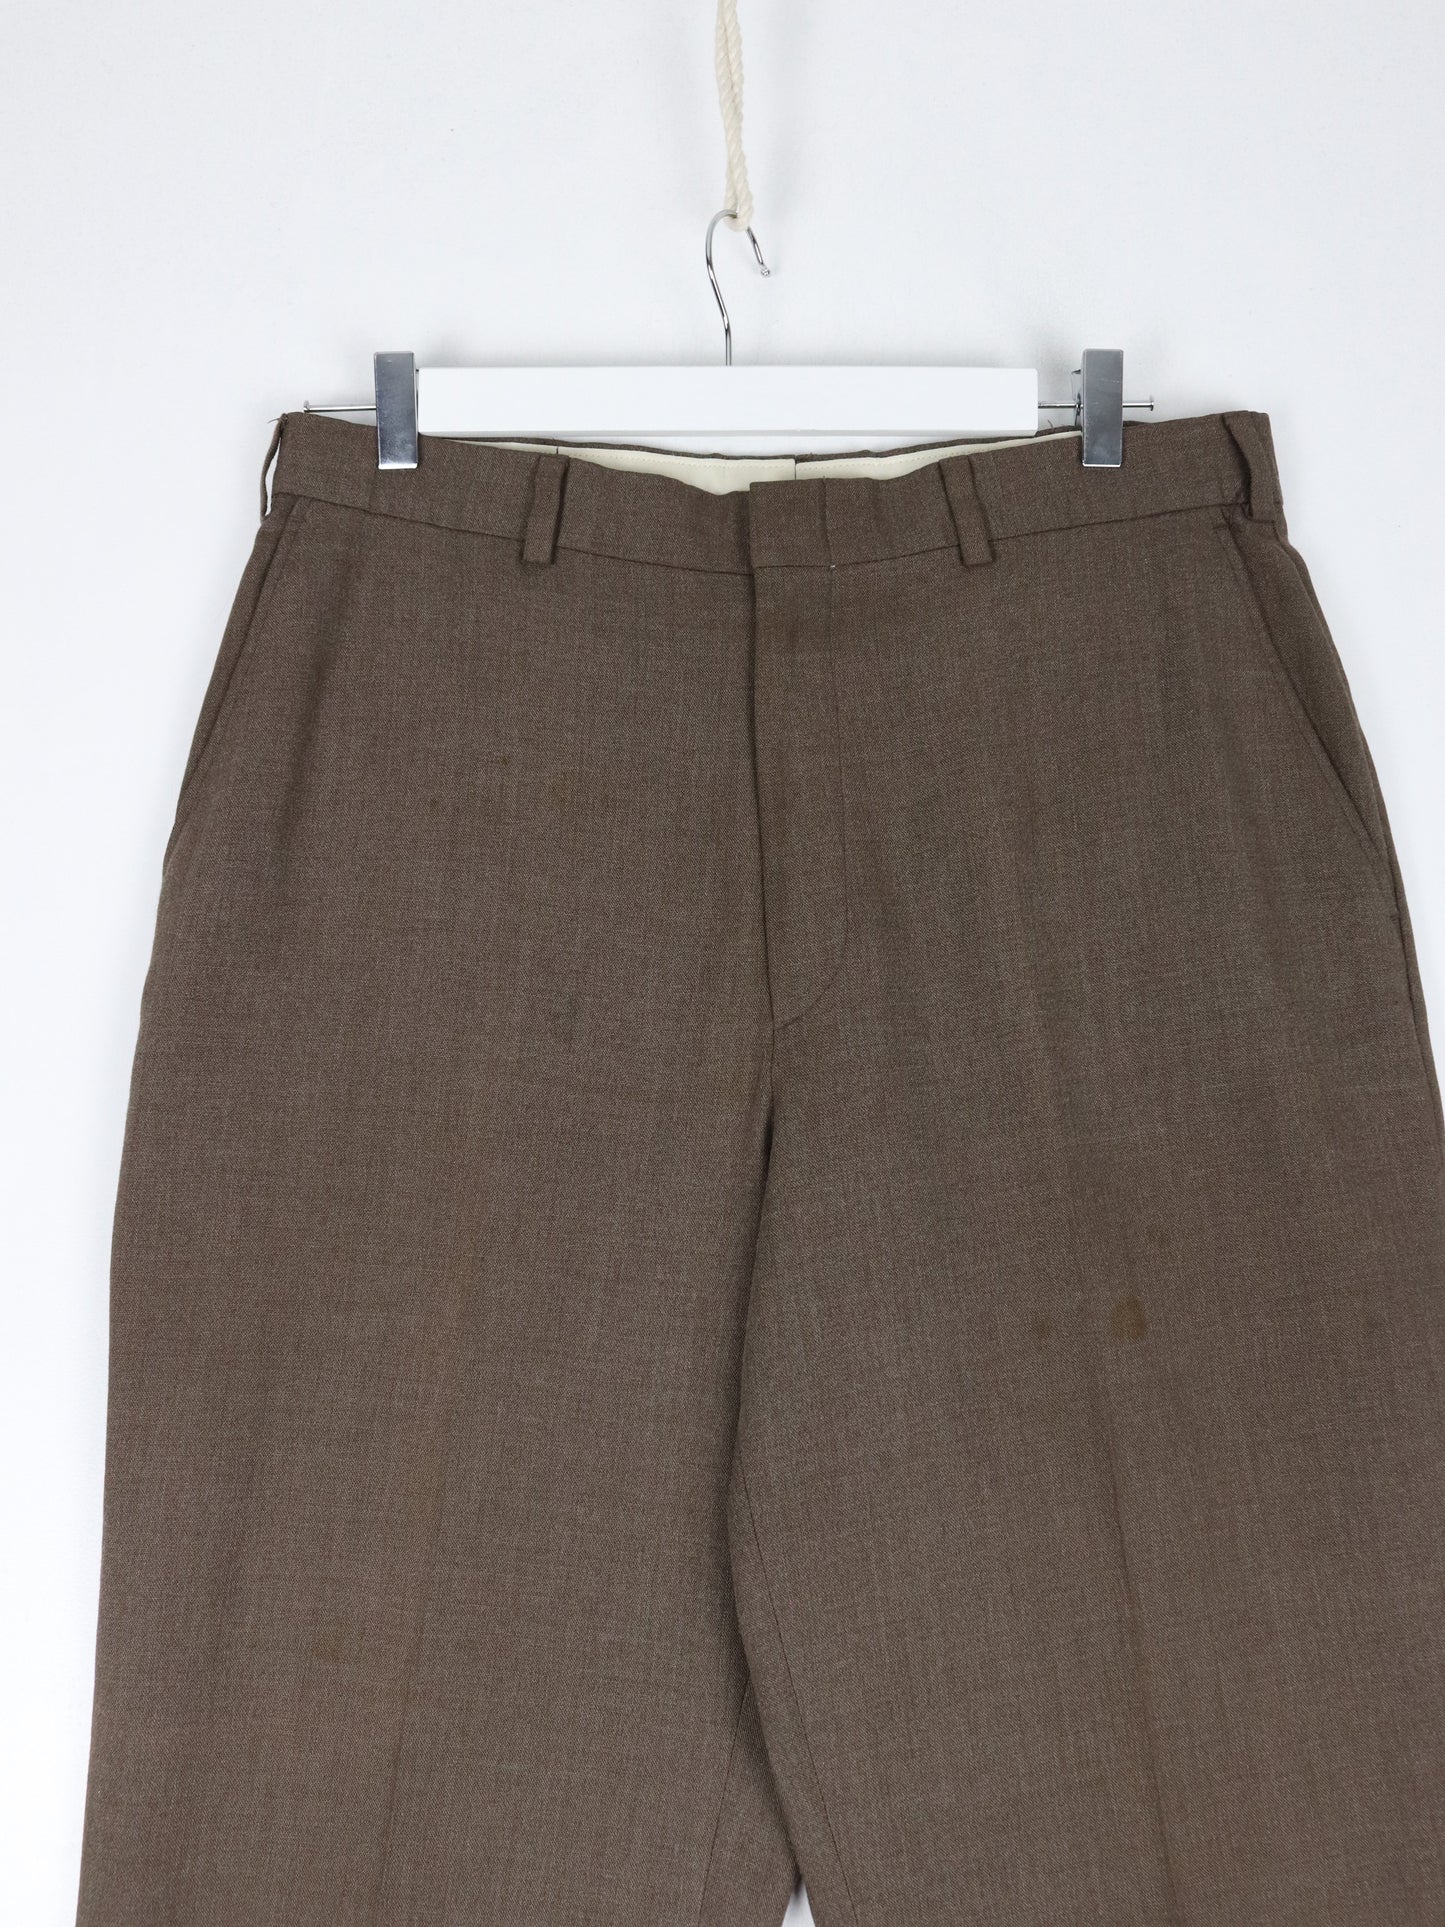 Vintage Farah Pants Mens 33 x 29 Brown Pleated Dress Trousers